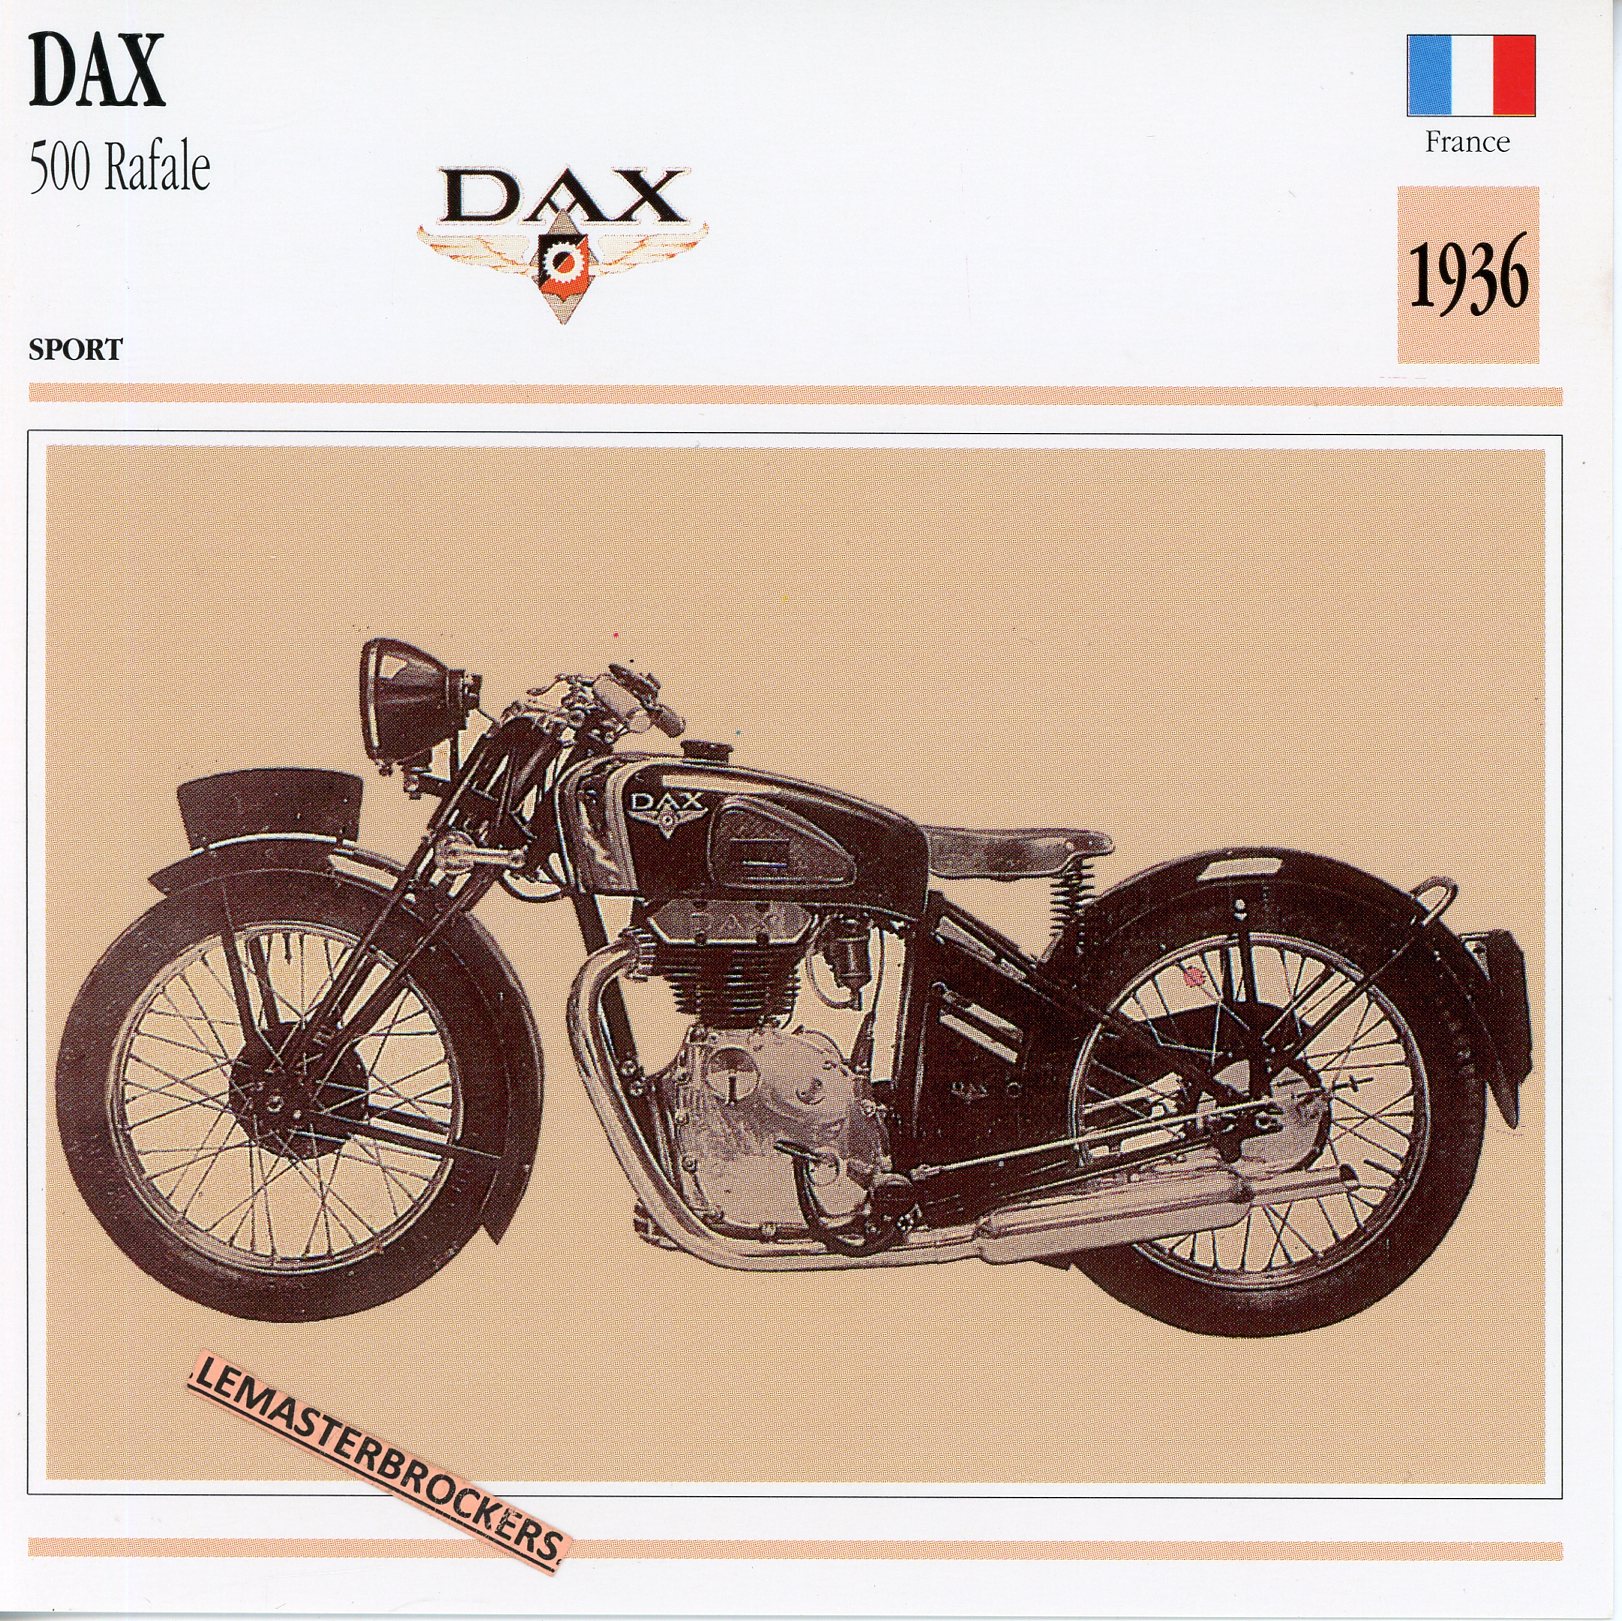 DAX-500-RAFALE-1936-FICHE-MOTO-MOTORCYCLE-CARDS-ATLAS-LEMASTERBROCKERS